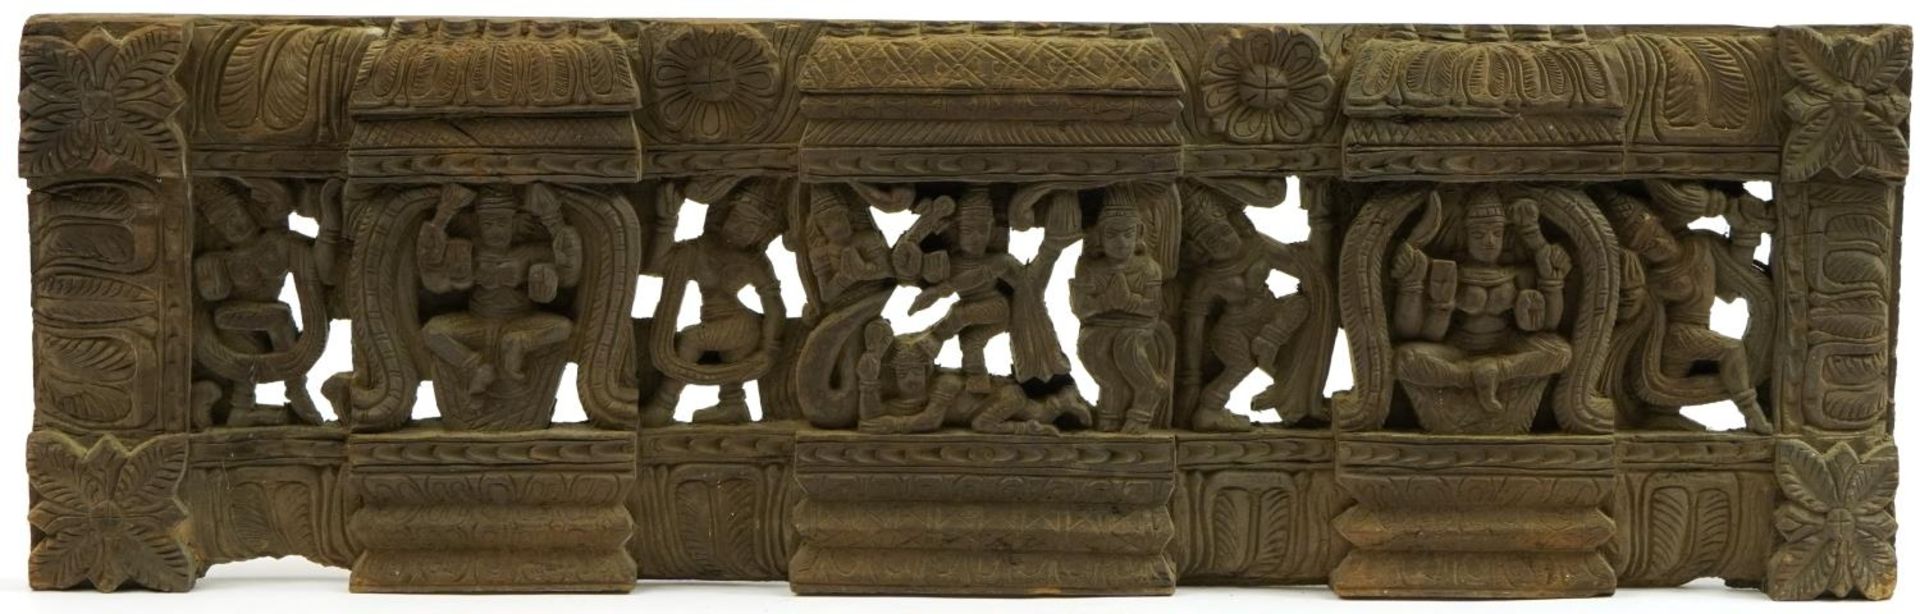 Burmese hardwood panel carved with deities and flowers, 76cm x 23cm